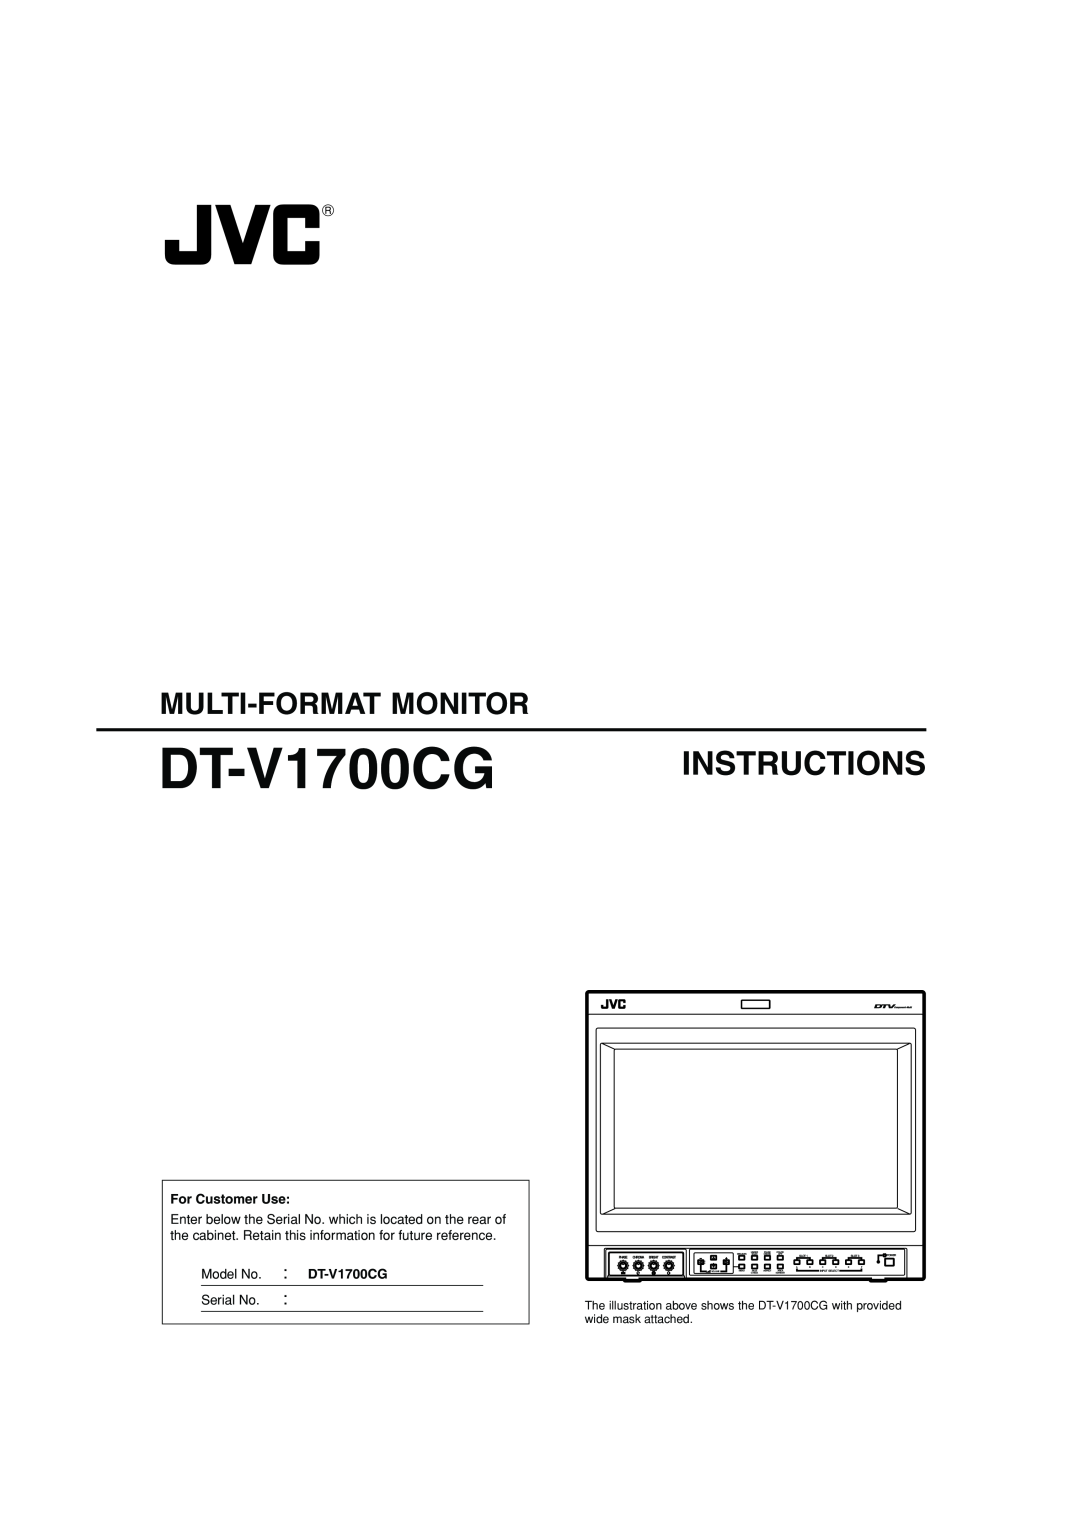 JVC manual Multi-Format Monitor, DT-V1700CG, Instructions, SLOT1 